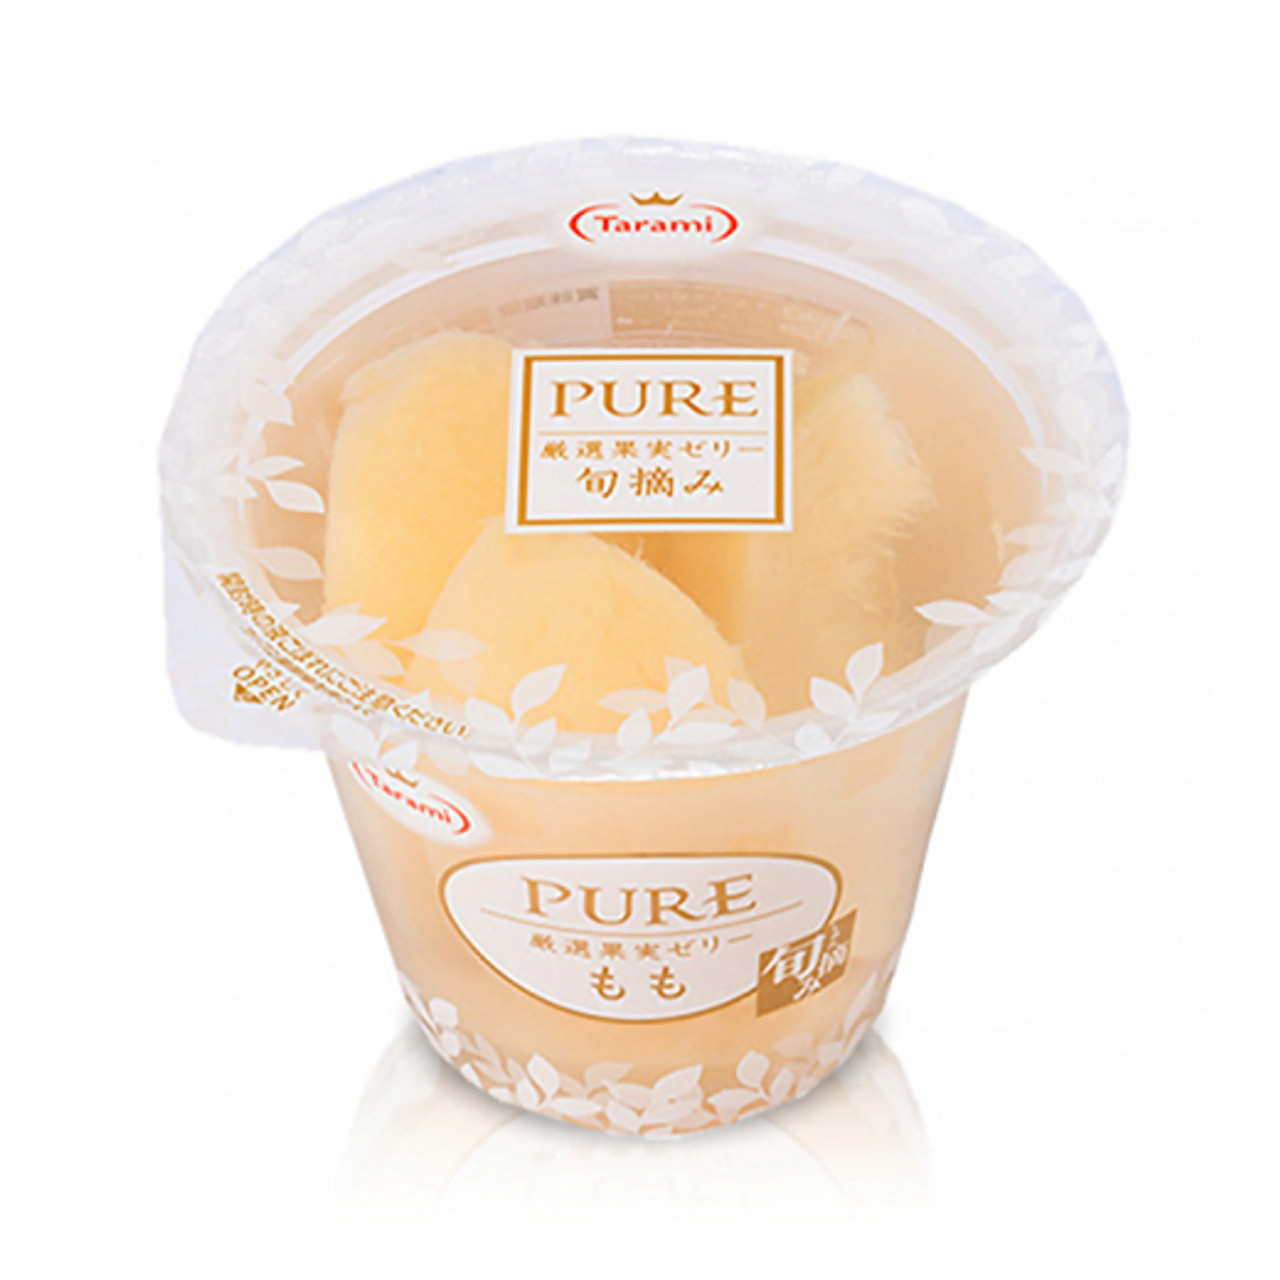 TARAMI Pure Jelly White Peach 270g/TARAMI Pure果冻白桃味270g